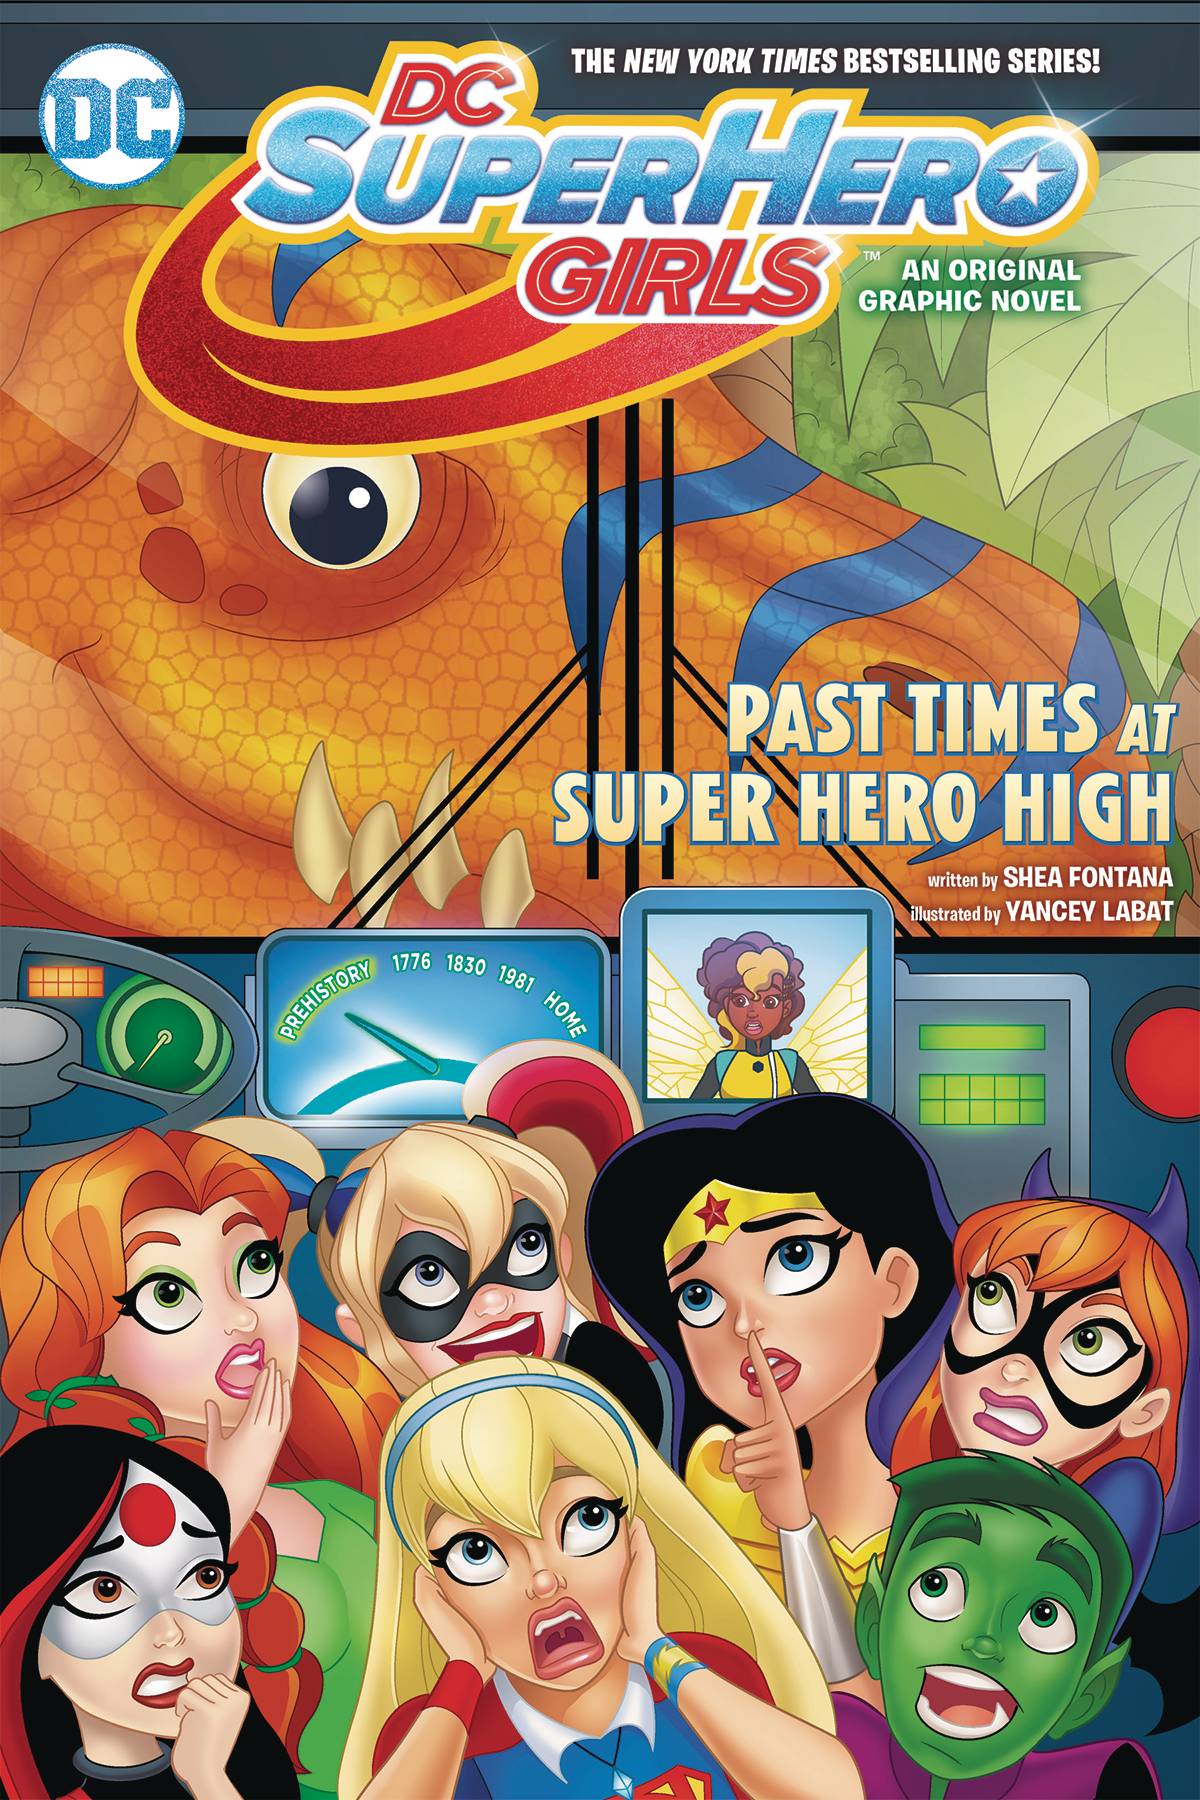 DC Super Hero Girls Graphic Novel Volume 4 Past Times At Super Hero High